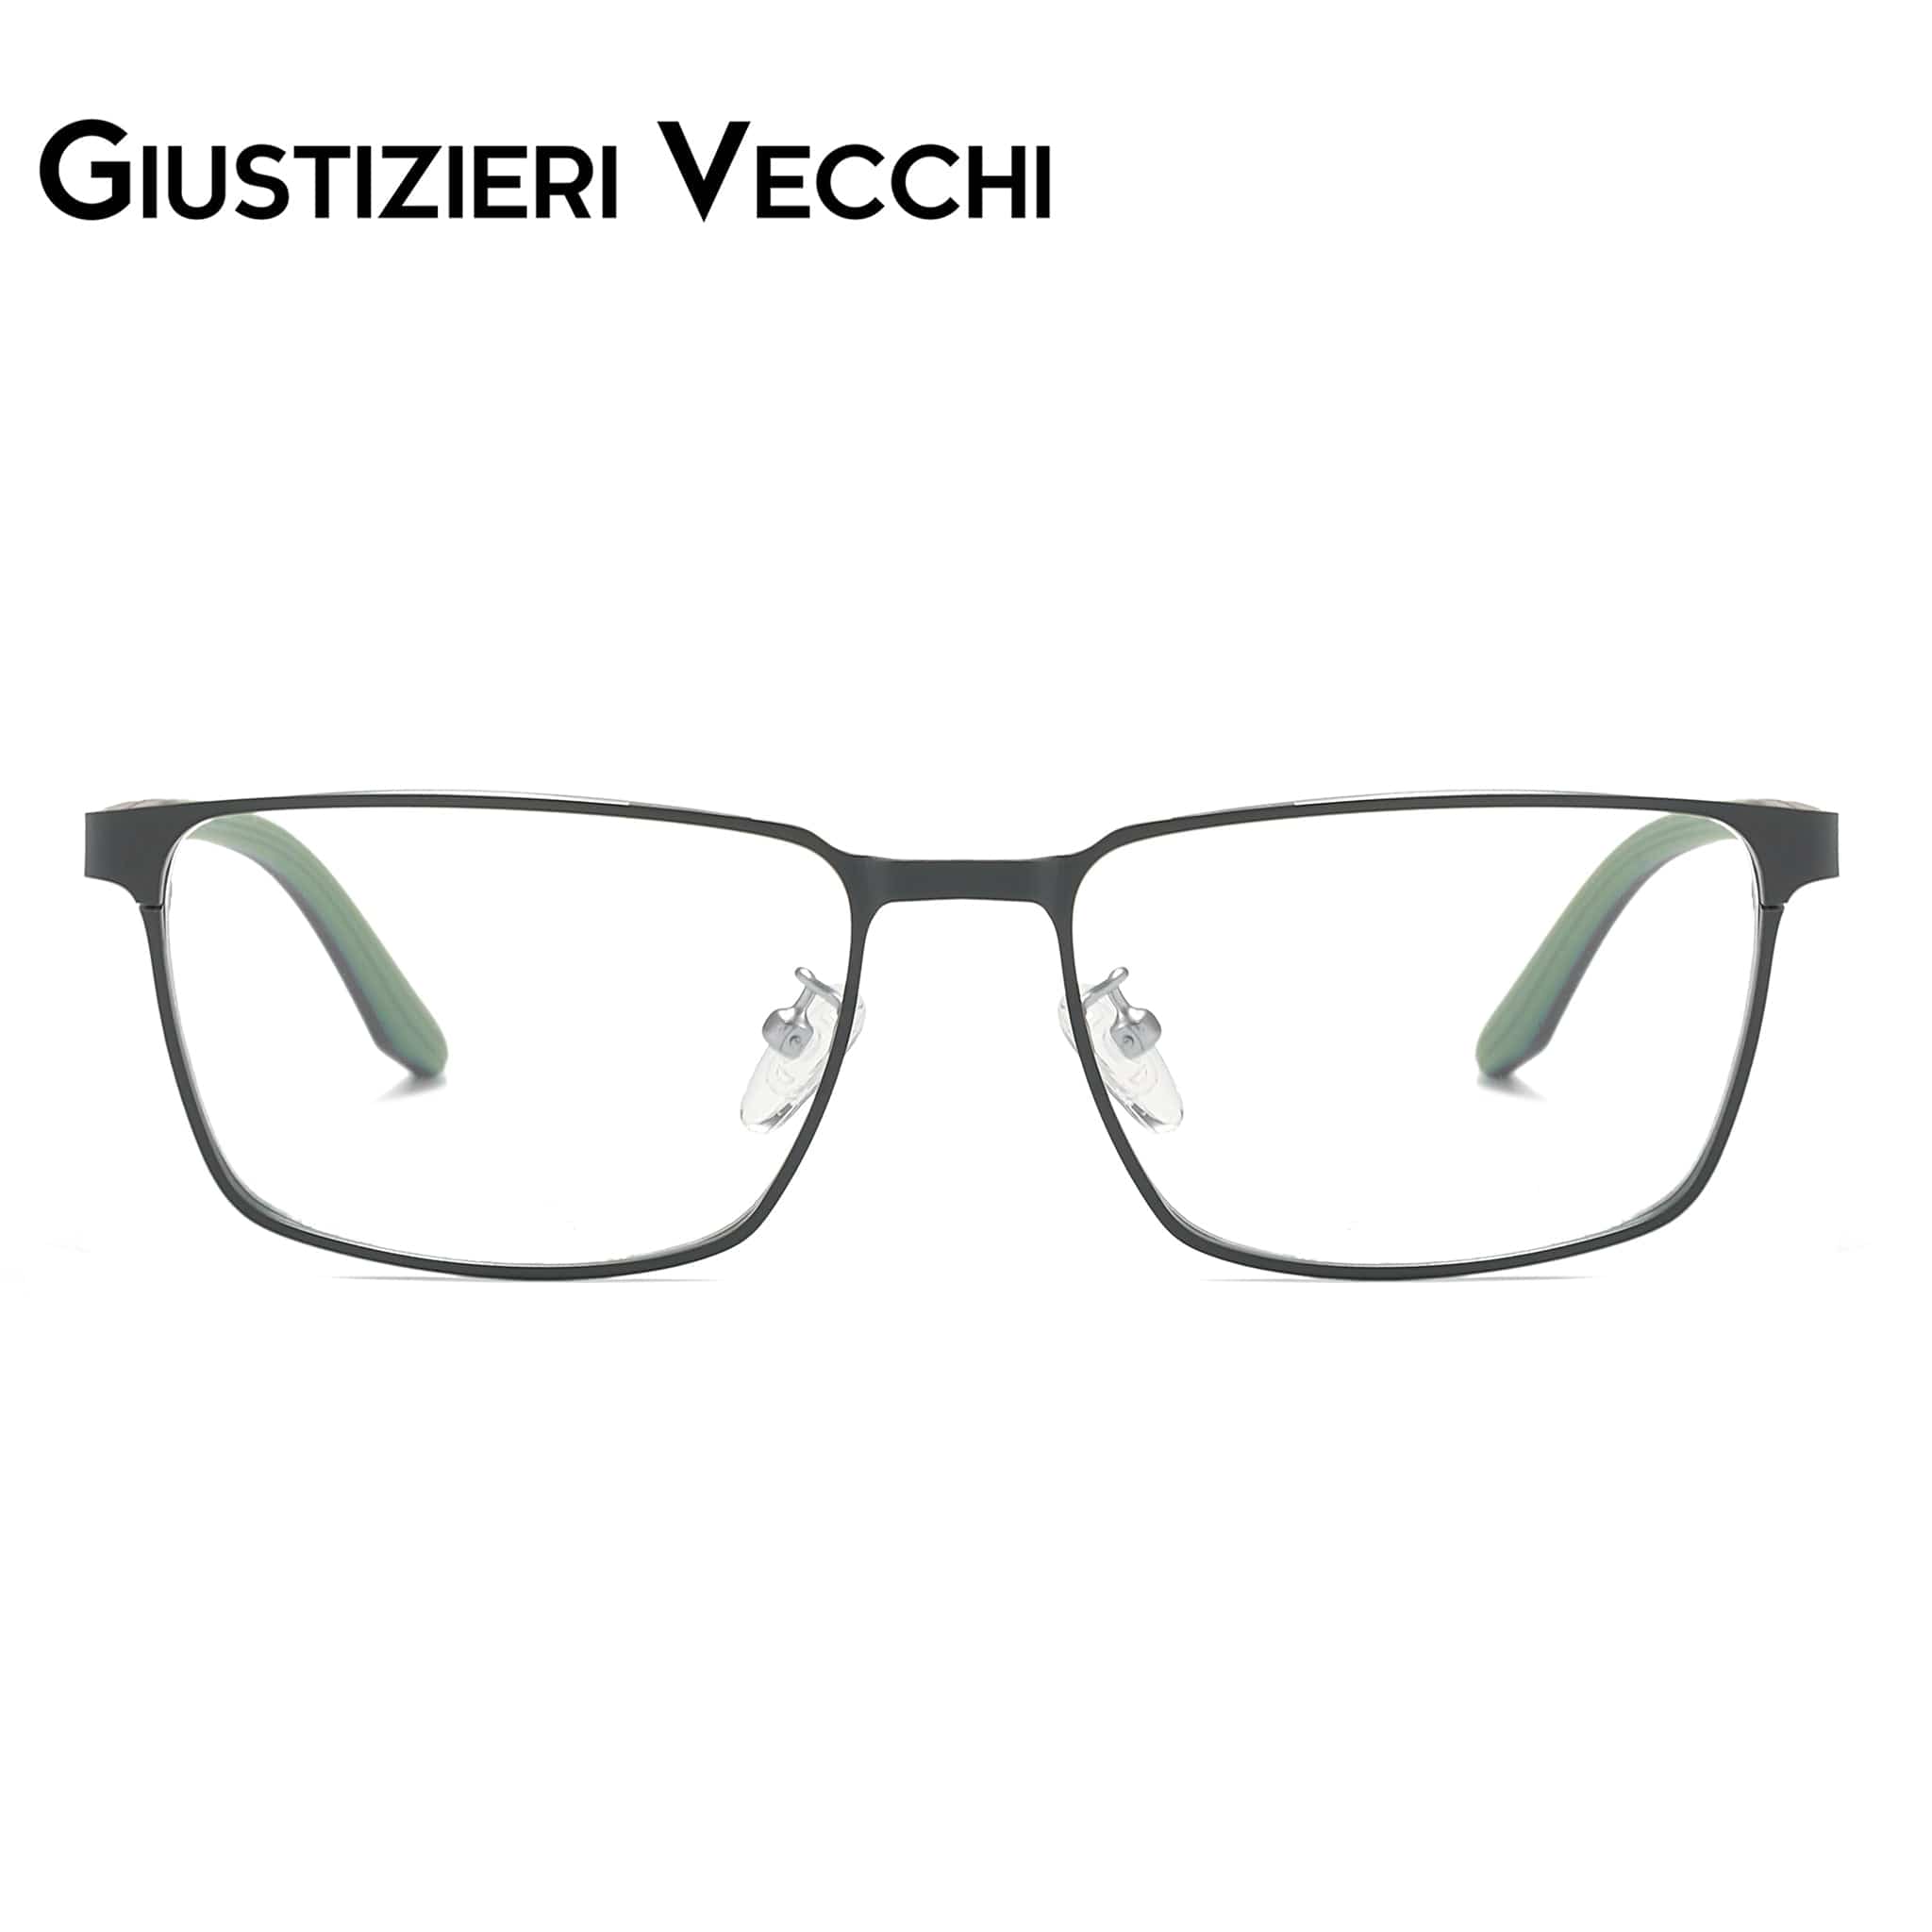 GIUSTIZIERI VECCHI Eyeglasses Large / Grey with Green IceSurf Duo